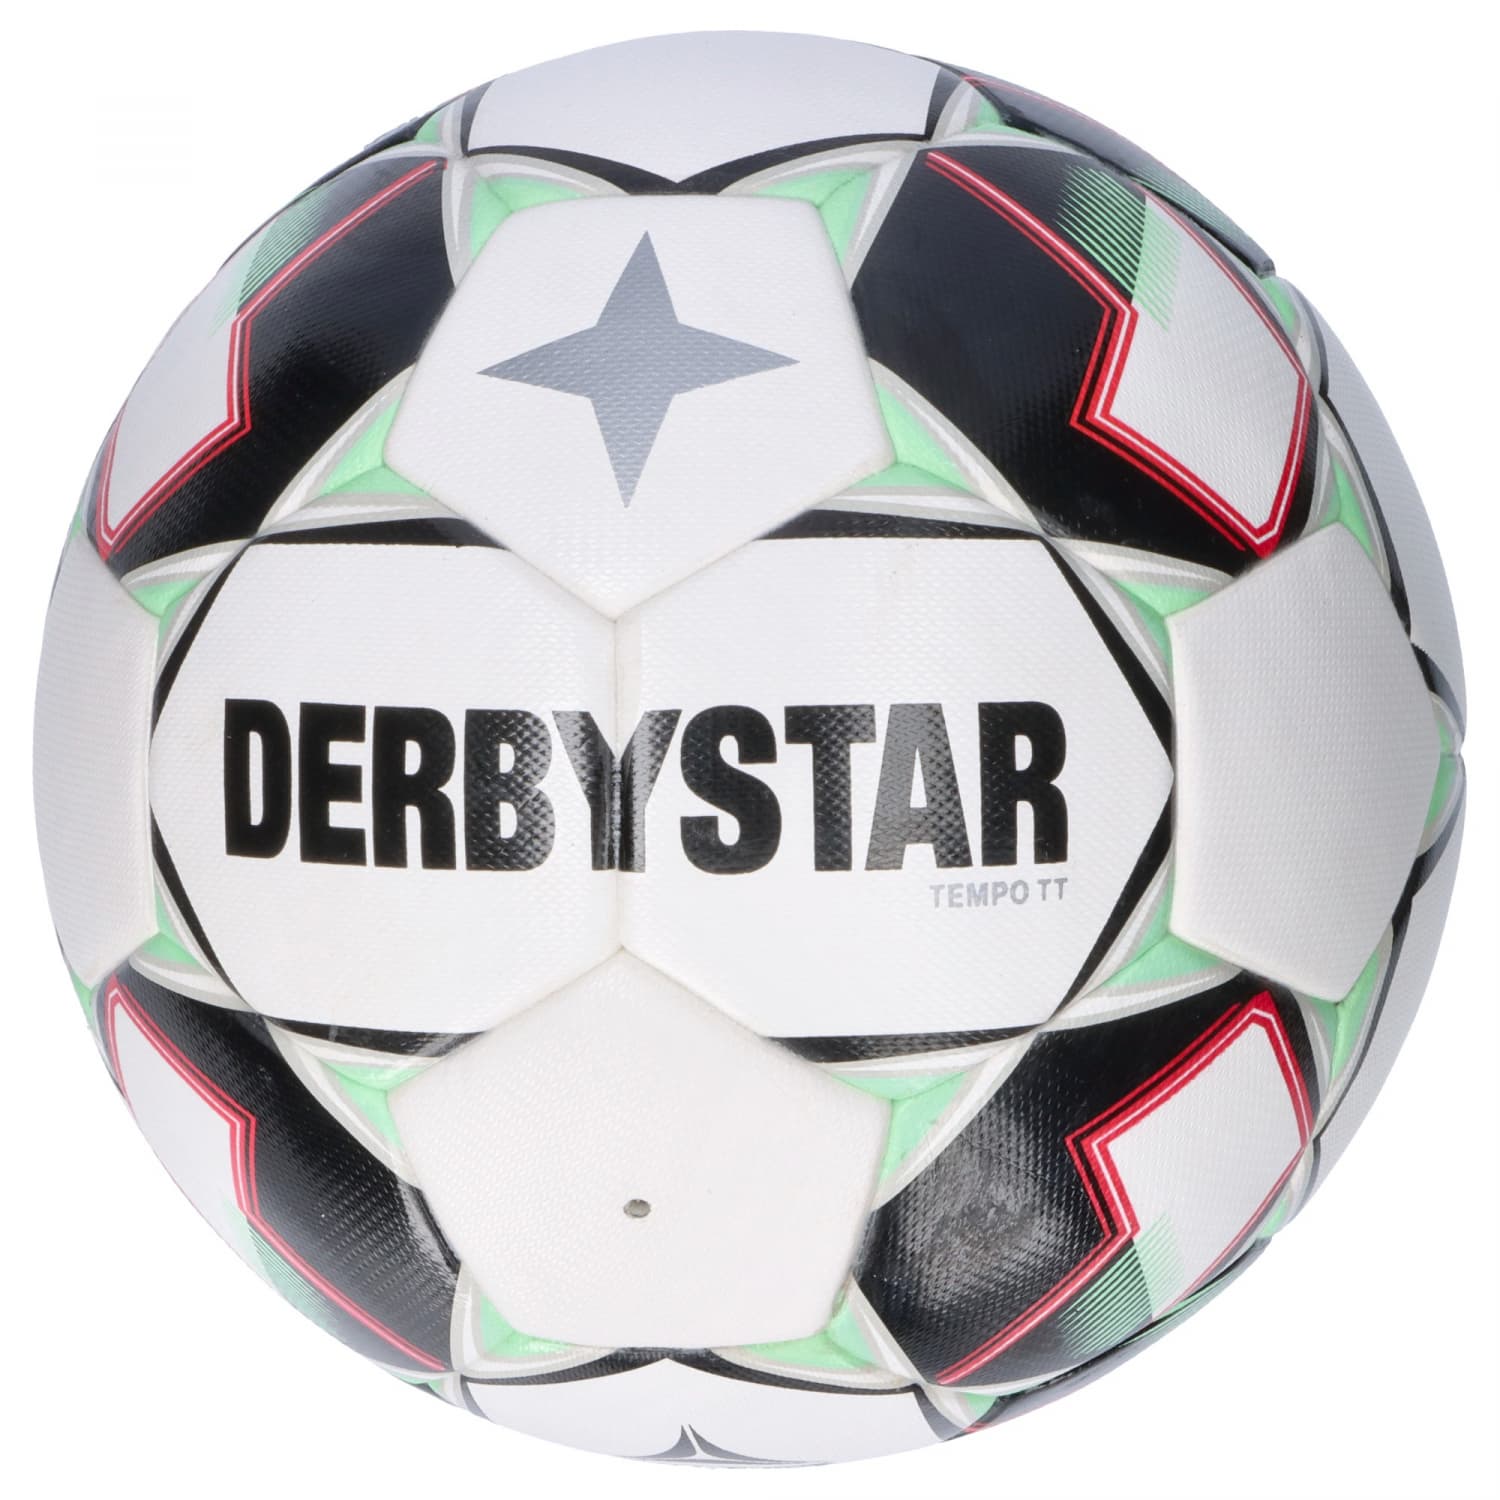 Derbystar Fussball Tempo TT 5 Weiss/Grün/Schwarz